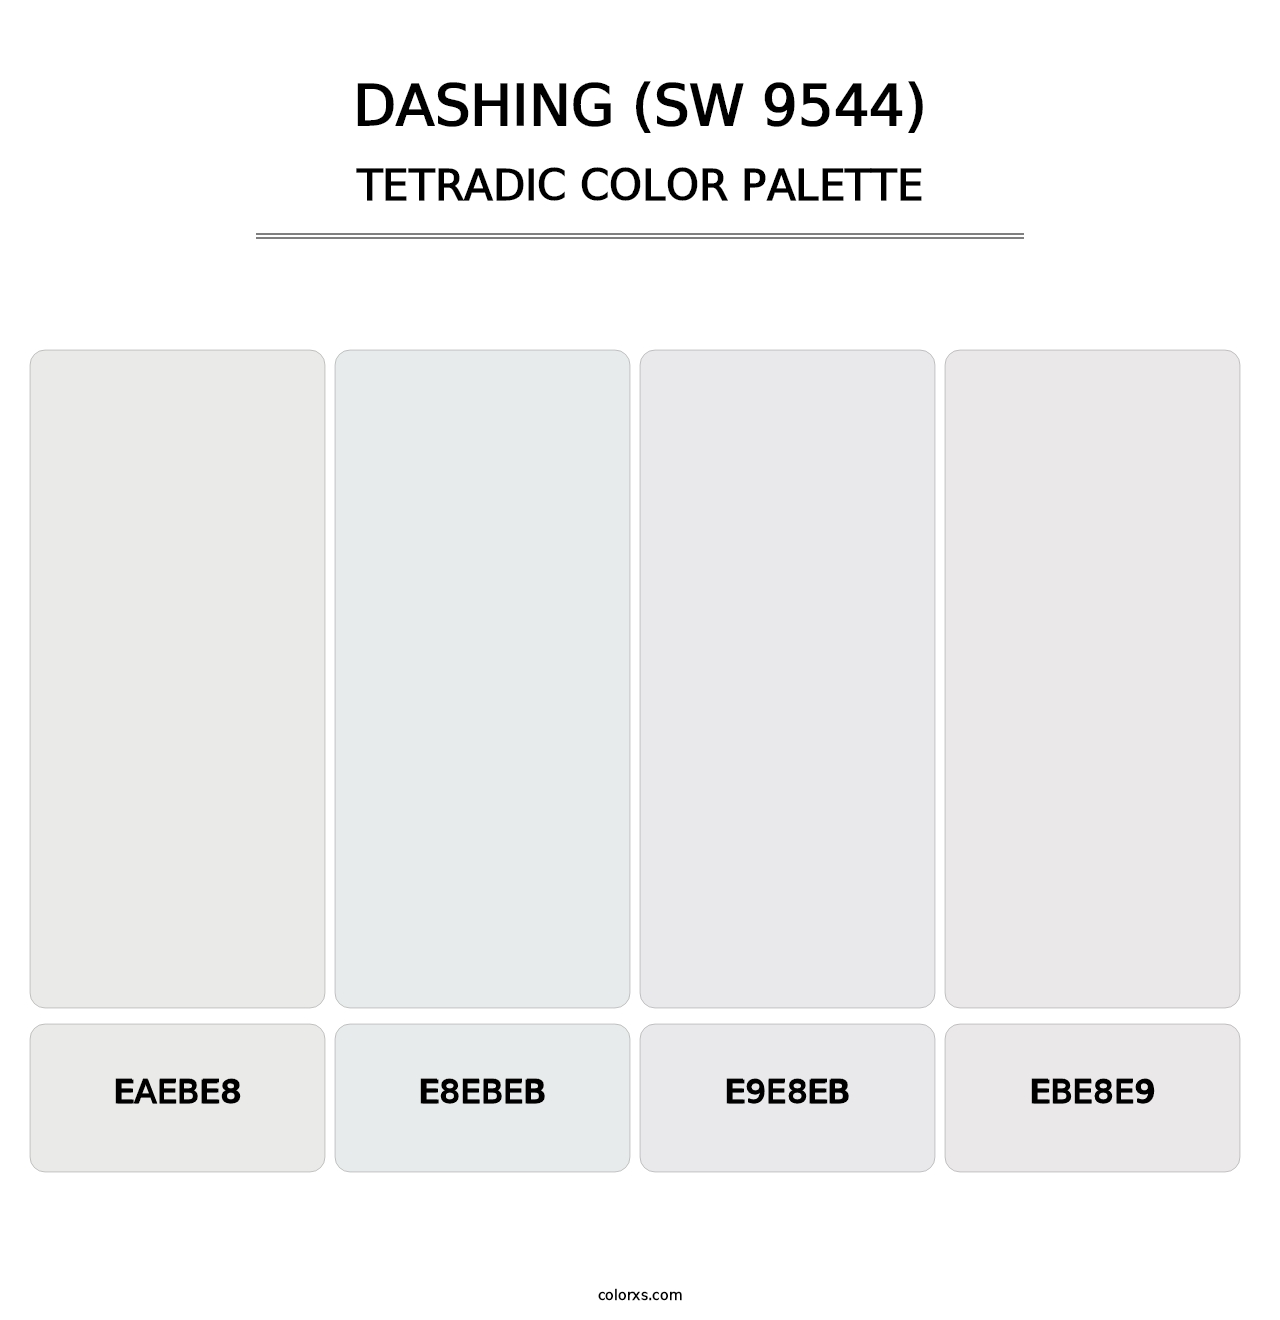 Dashing (SW 9544) - Tetradic Color Palette